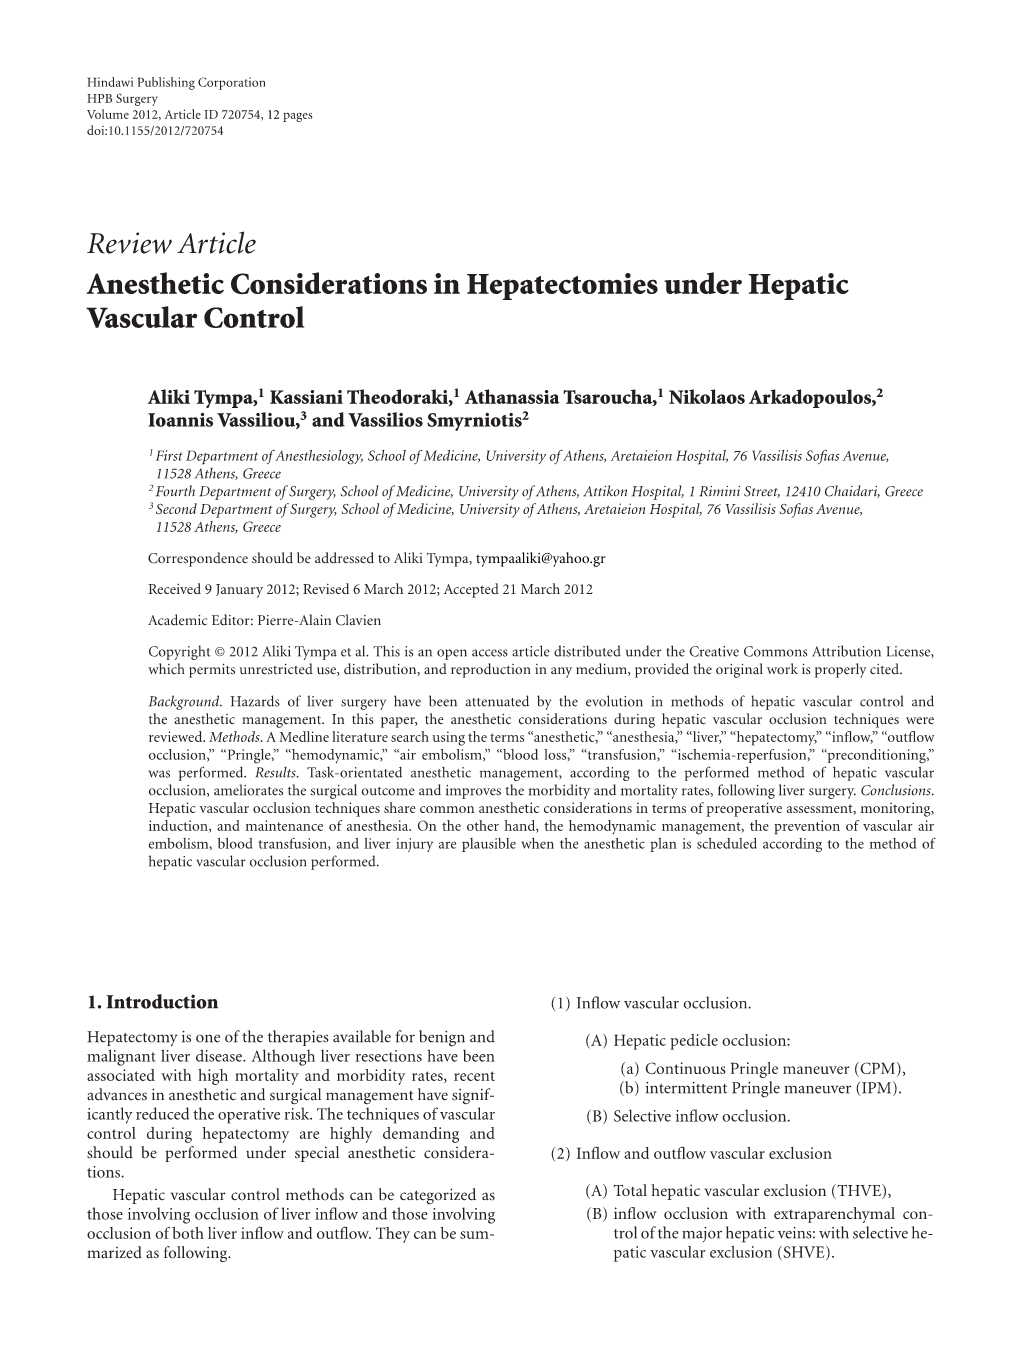 Anesthetic Considerations in Hepatectomies Under Hepatic Vascular Control